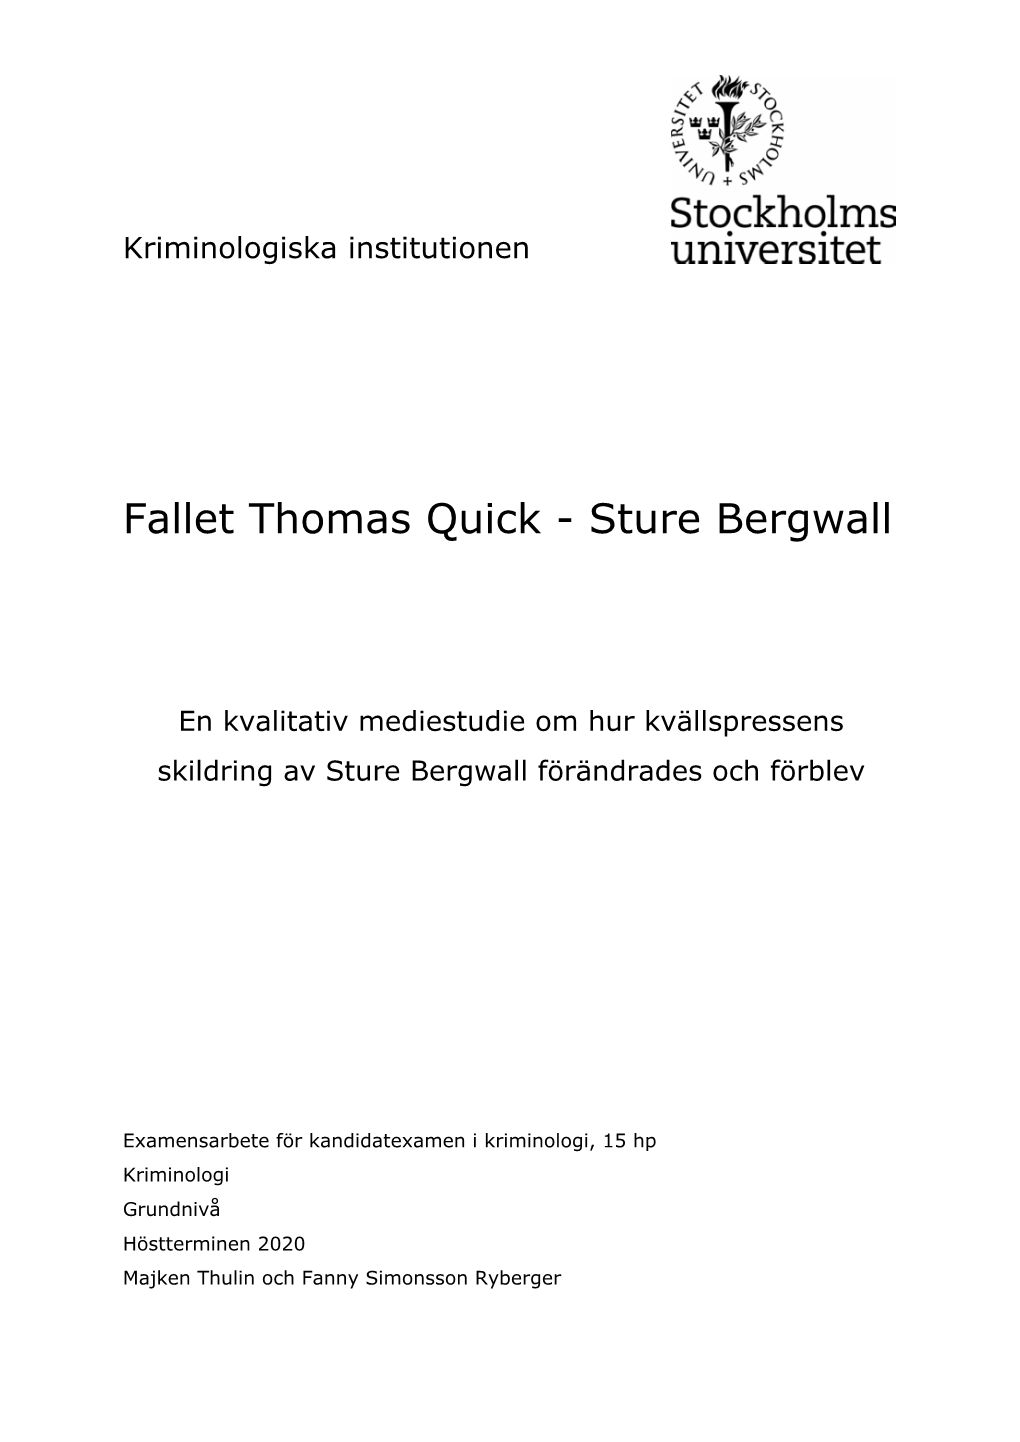 Fallet Thomas Quick - Sture Bergwall